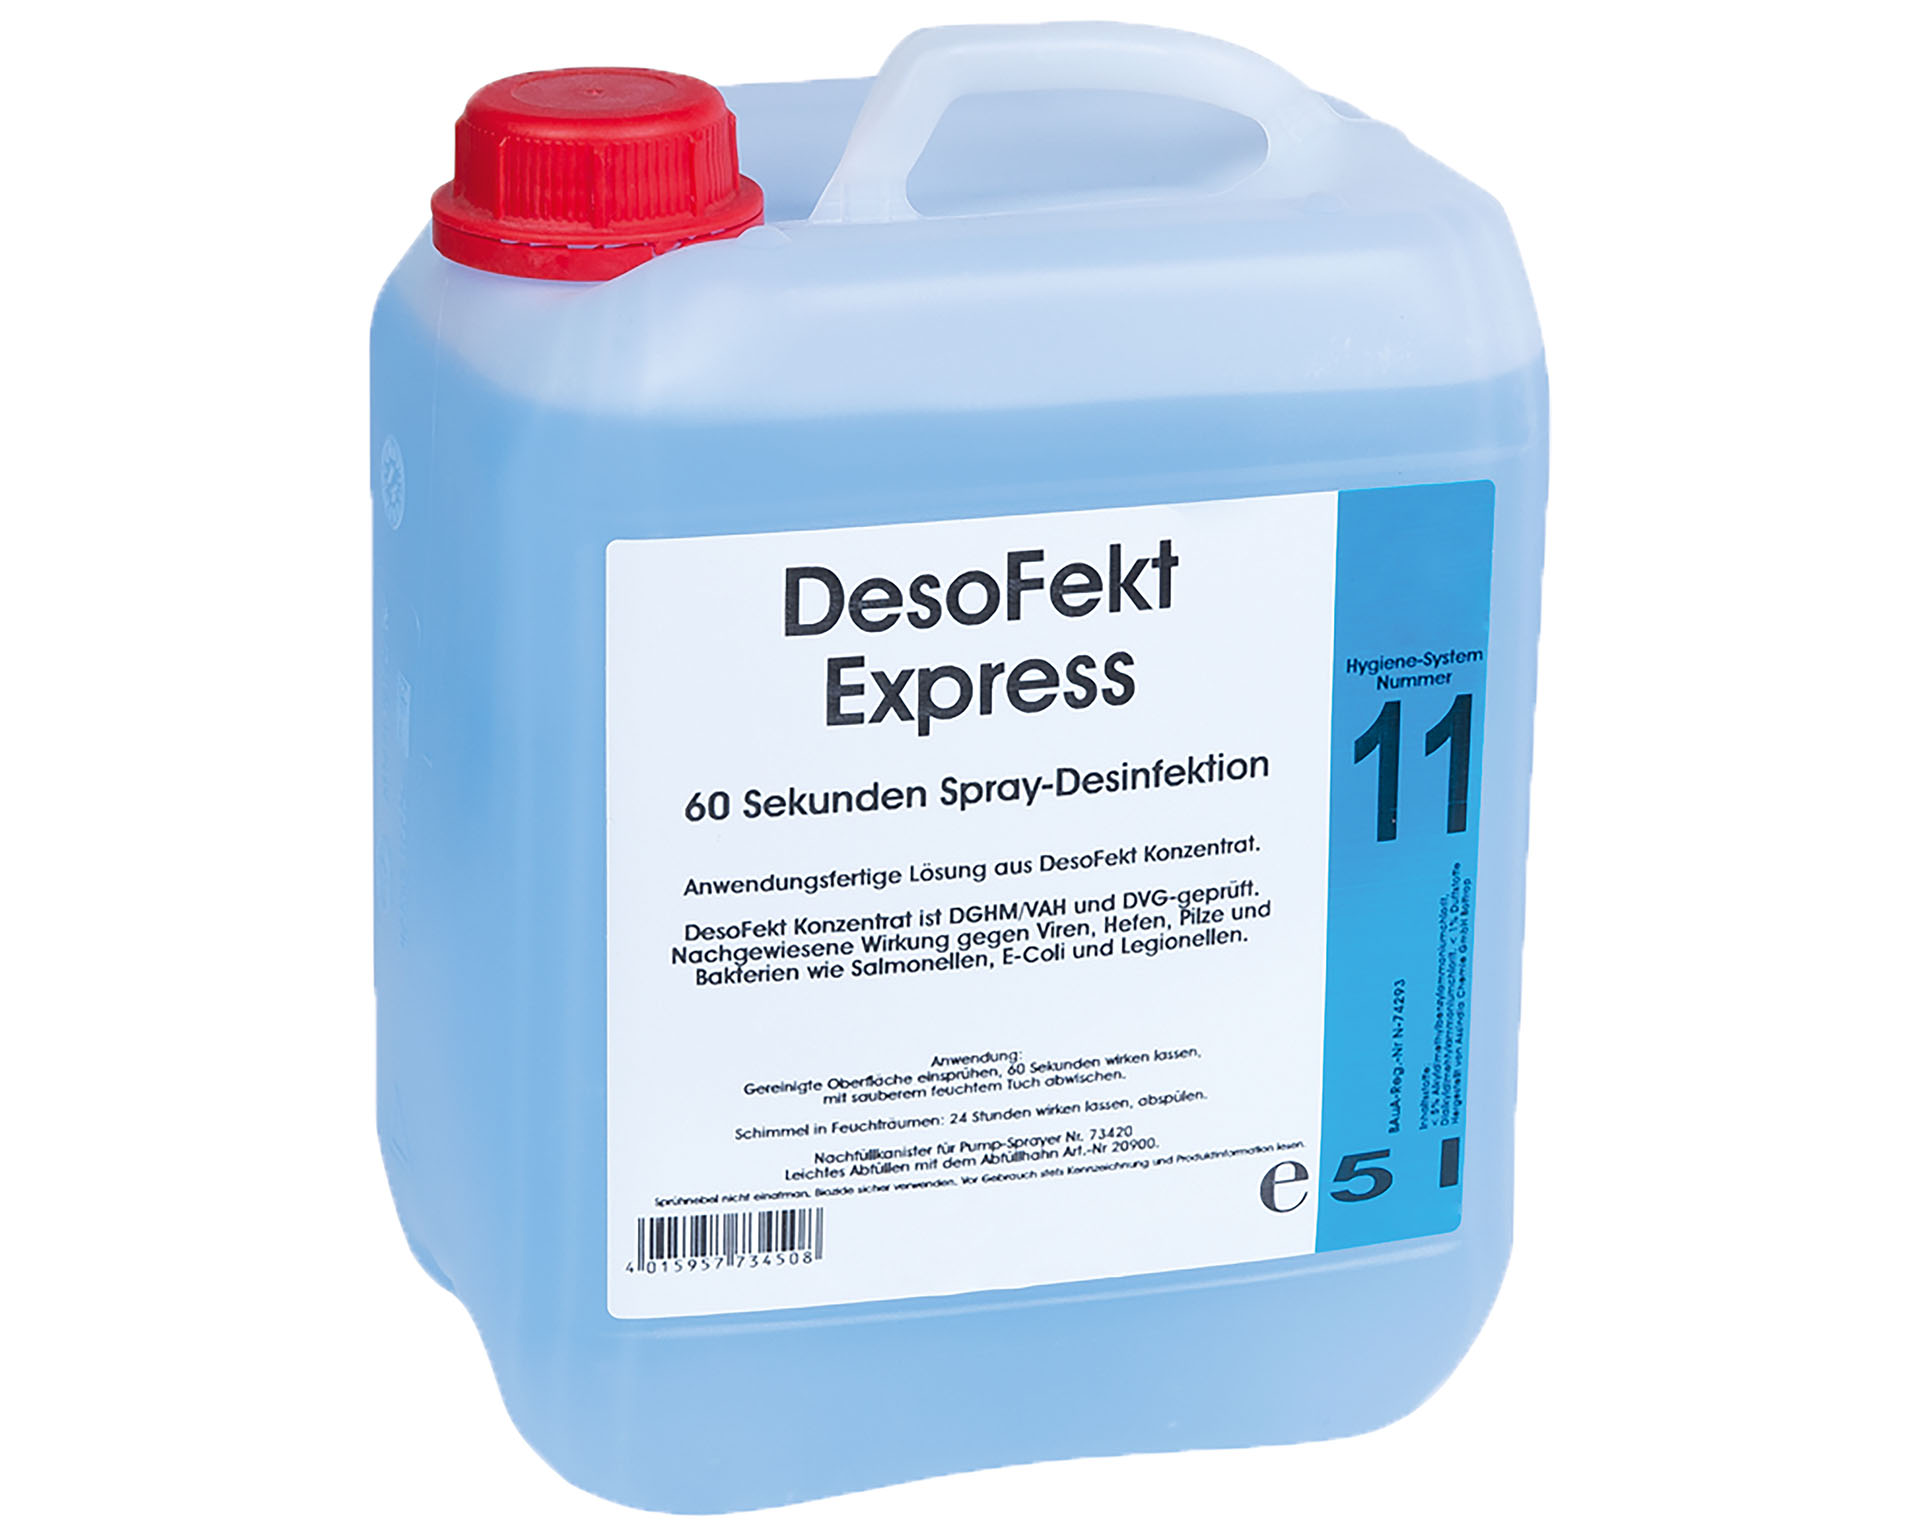 SARO DesoFekt Express 60 Sekunden Spray-Desinfektion

Modell NR.11